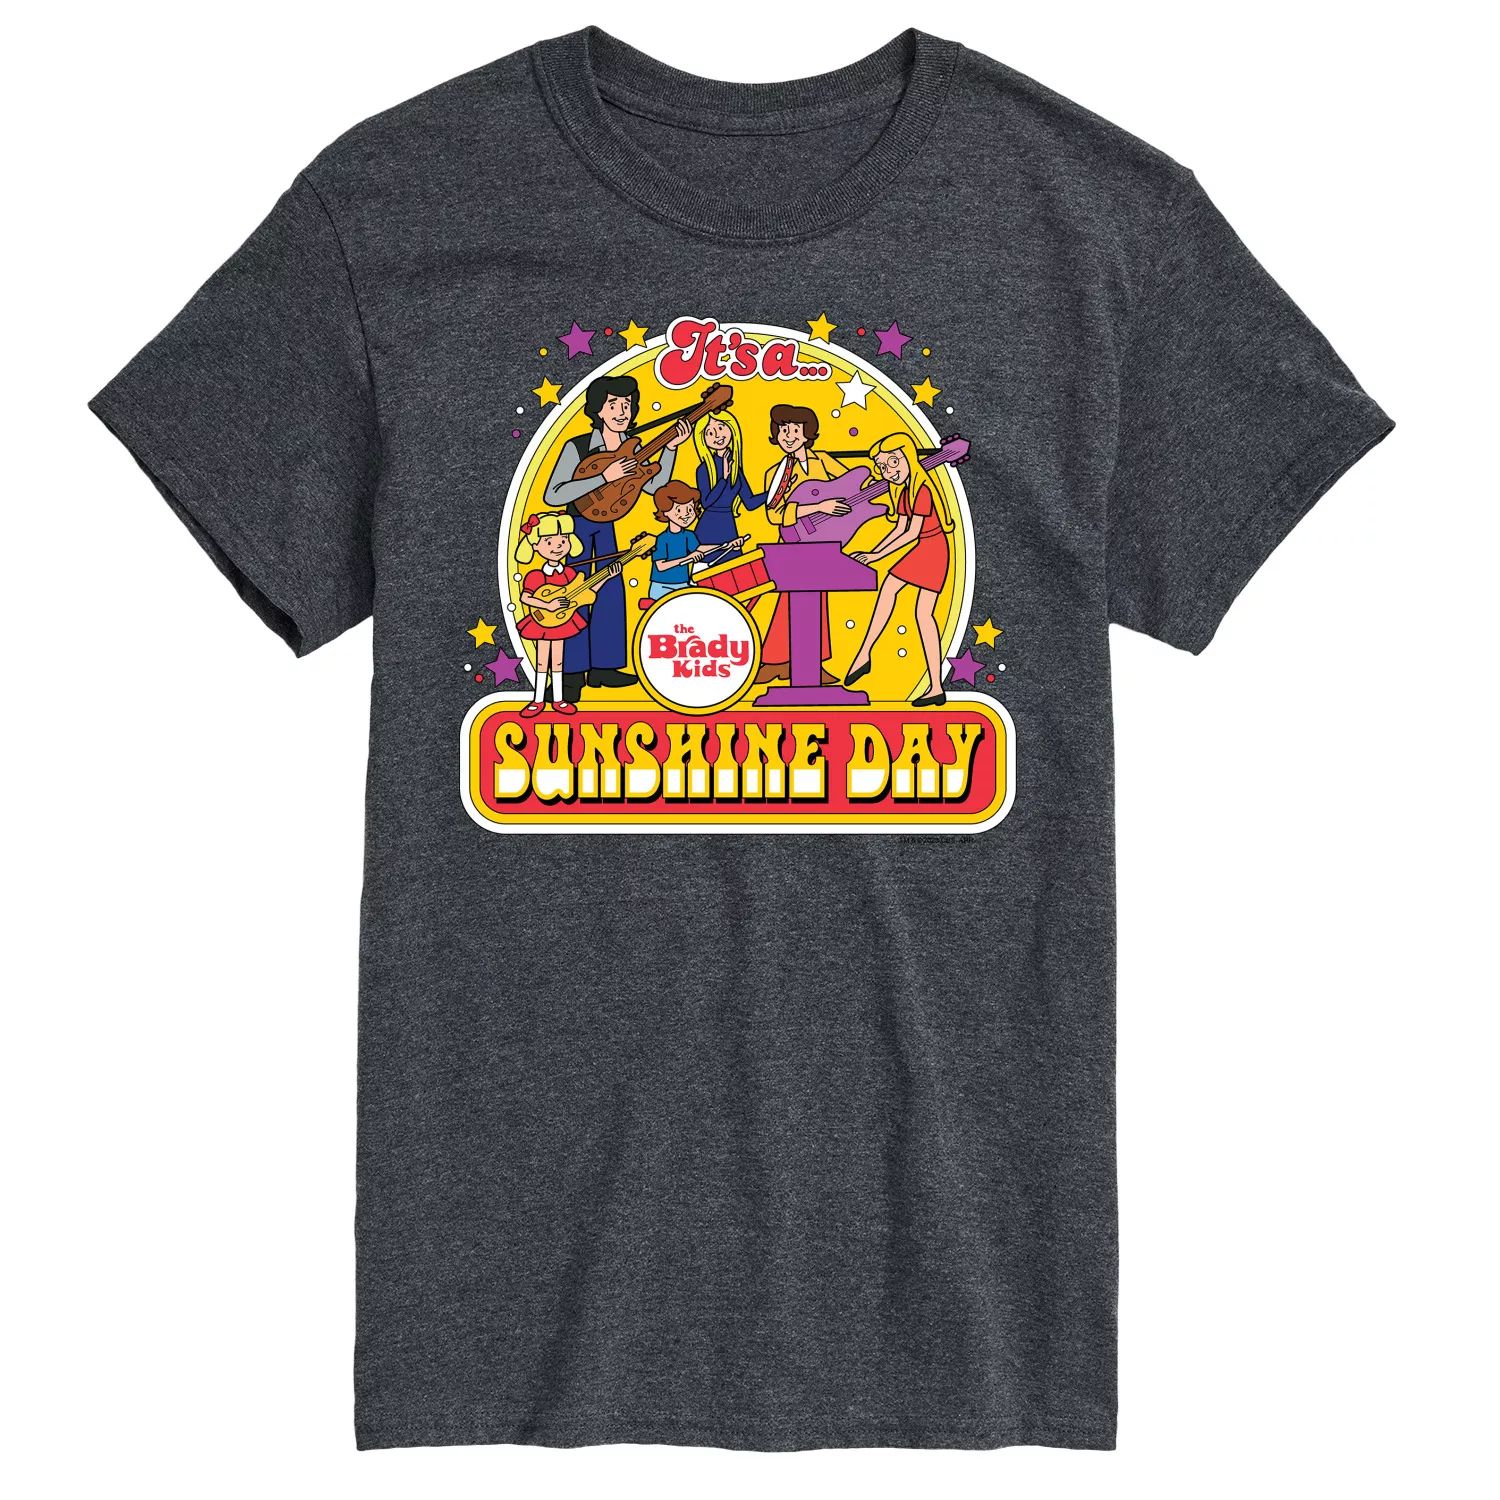 Мужская футболка с рисунком The Brady Bunch Sunshine Day Licensed Character цена и фото